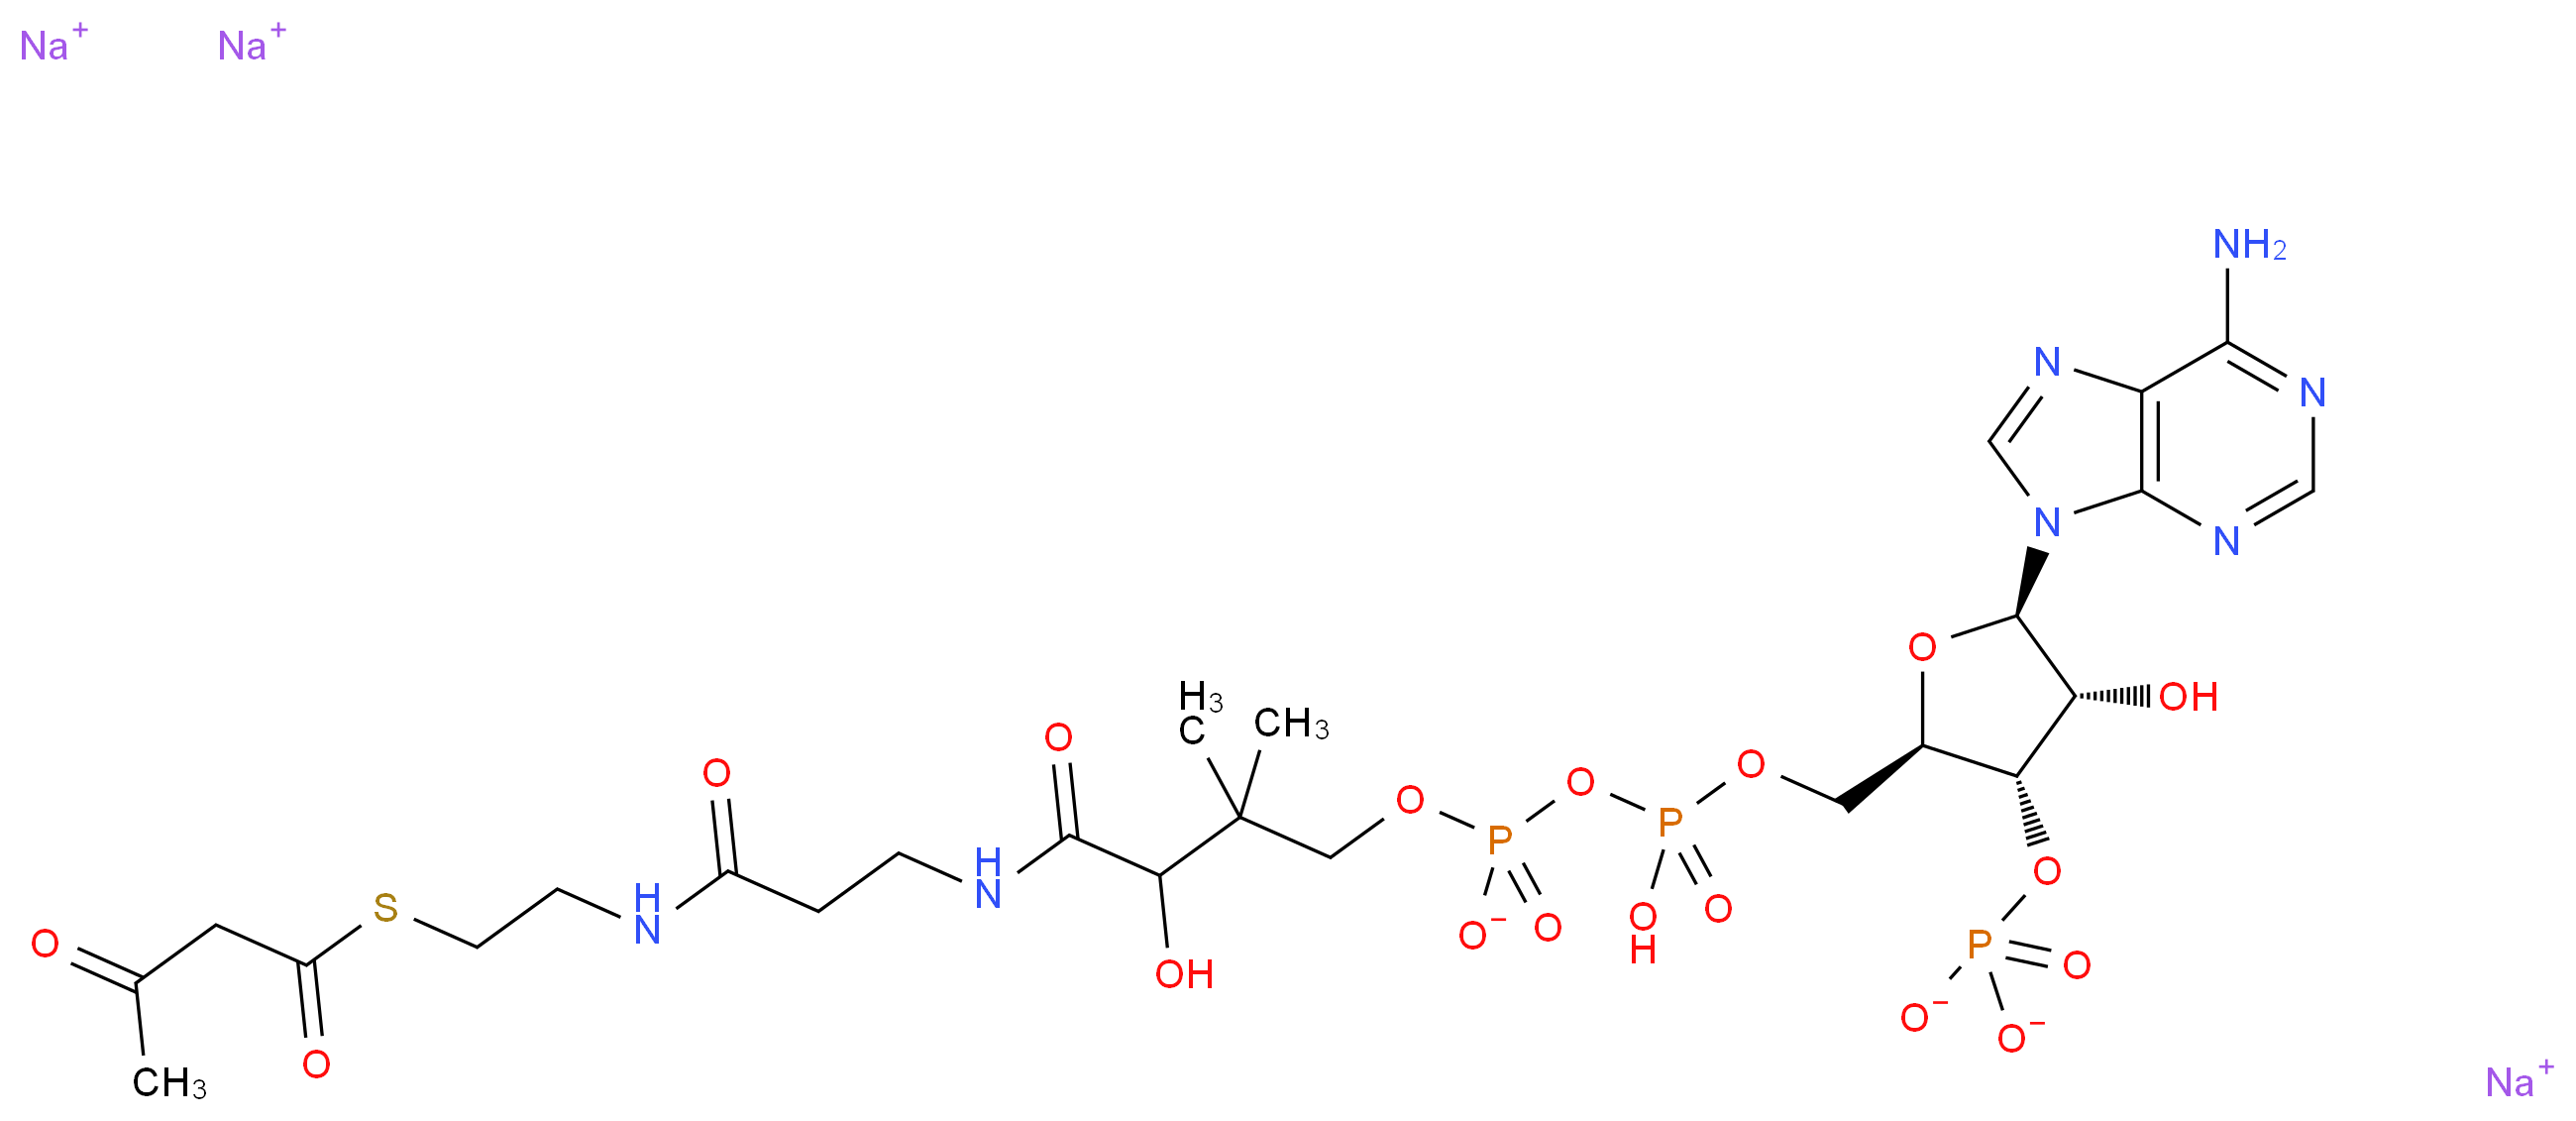 1420-36-6(freeacid) molecular structure